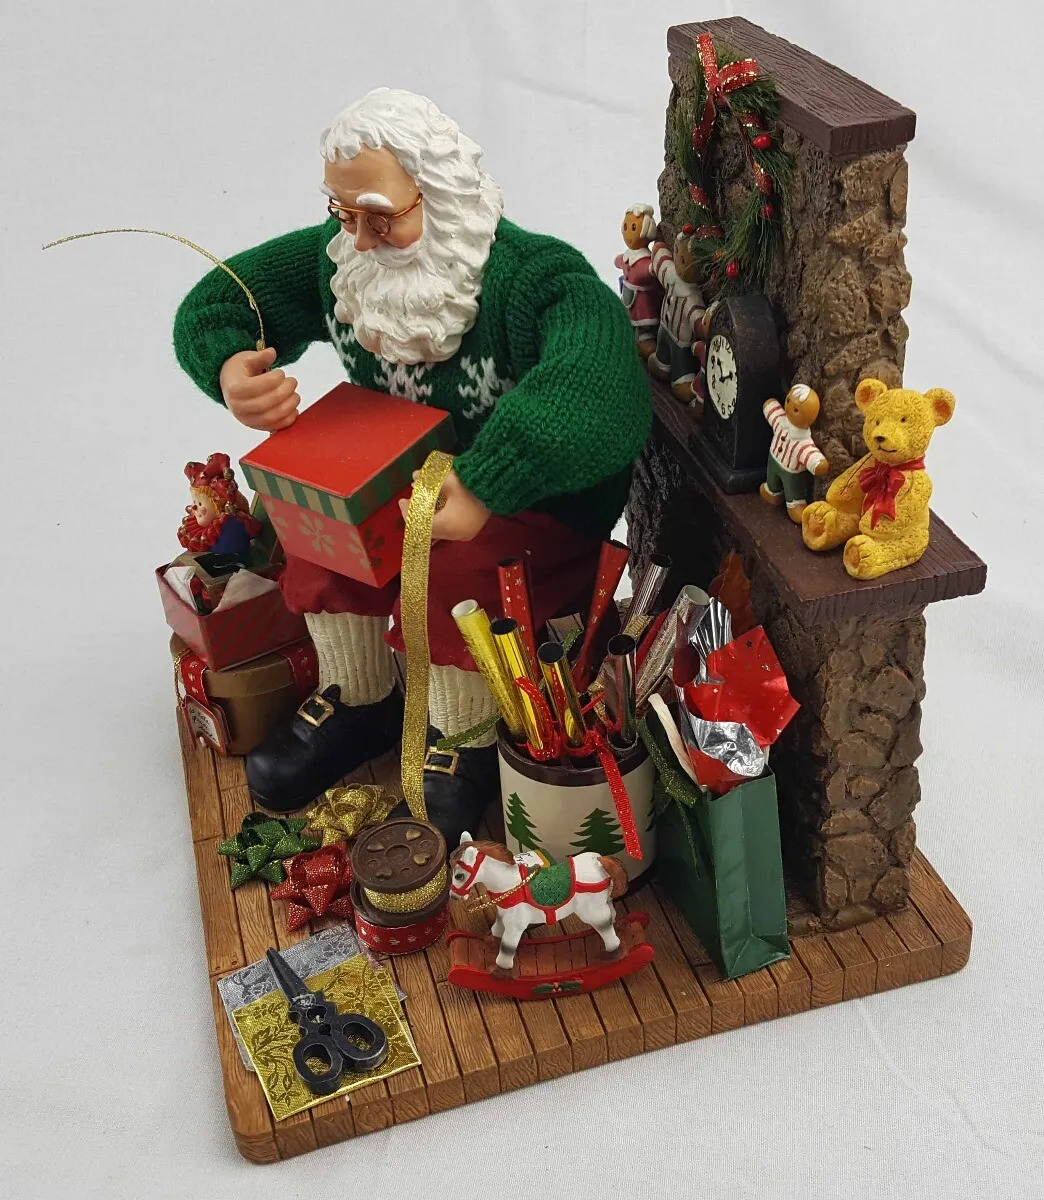 Kirkland Fabric Mache Santa Claus in Workshop Figurine | eBay